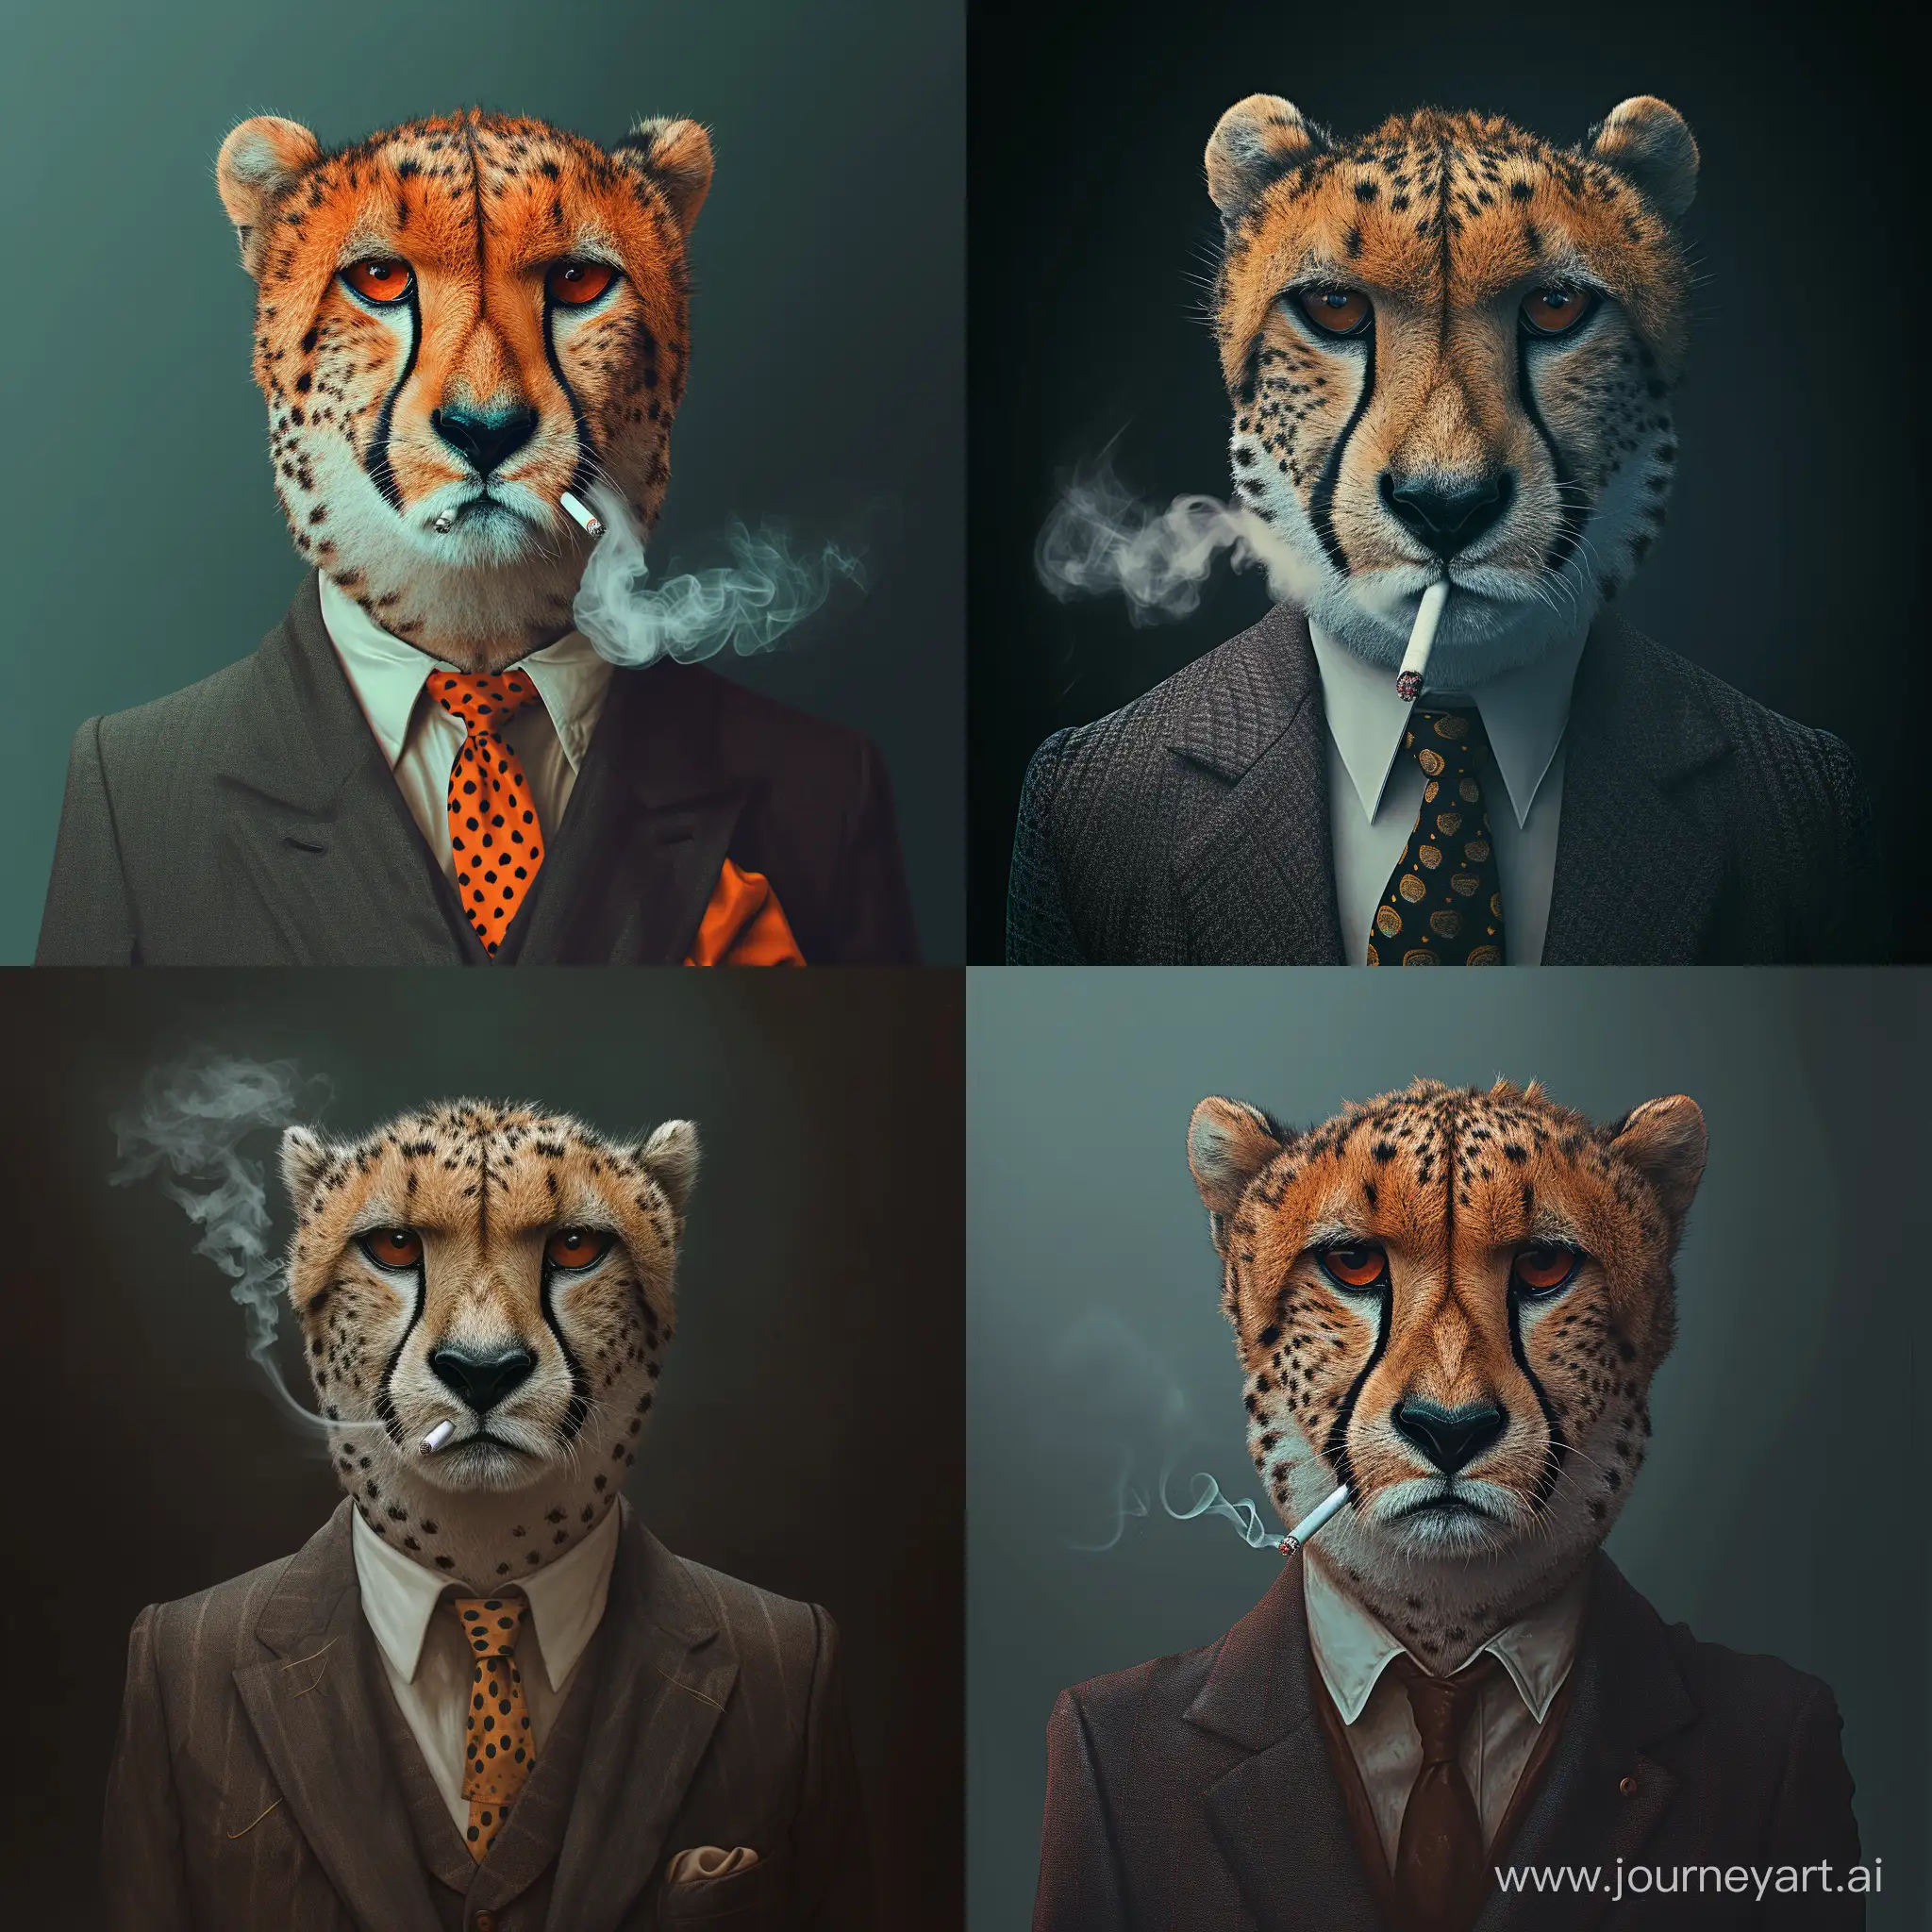 Anthropomorphic-Iranian-Cheetah-in-Dramatic-Suit-Portrait